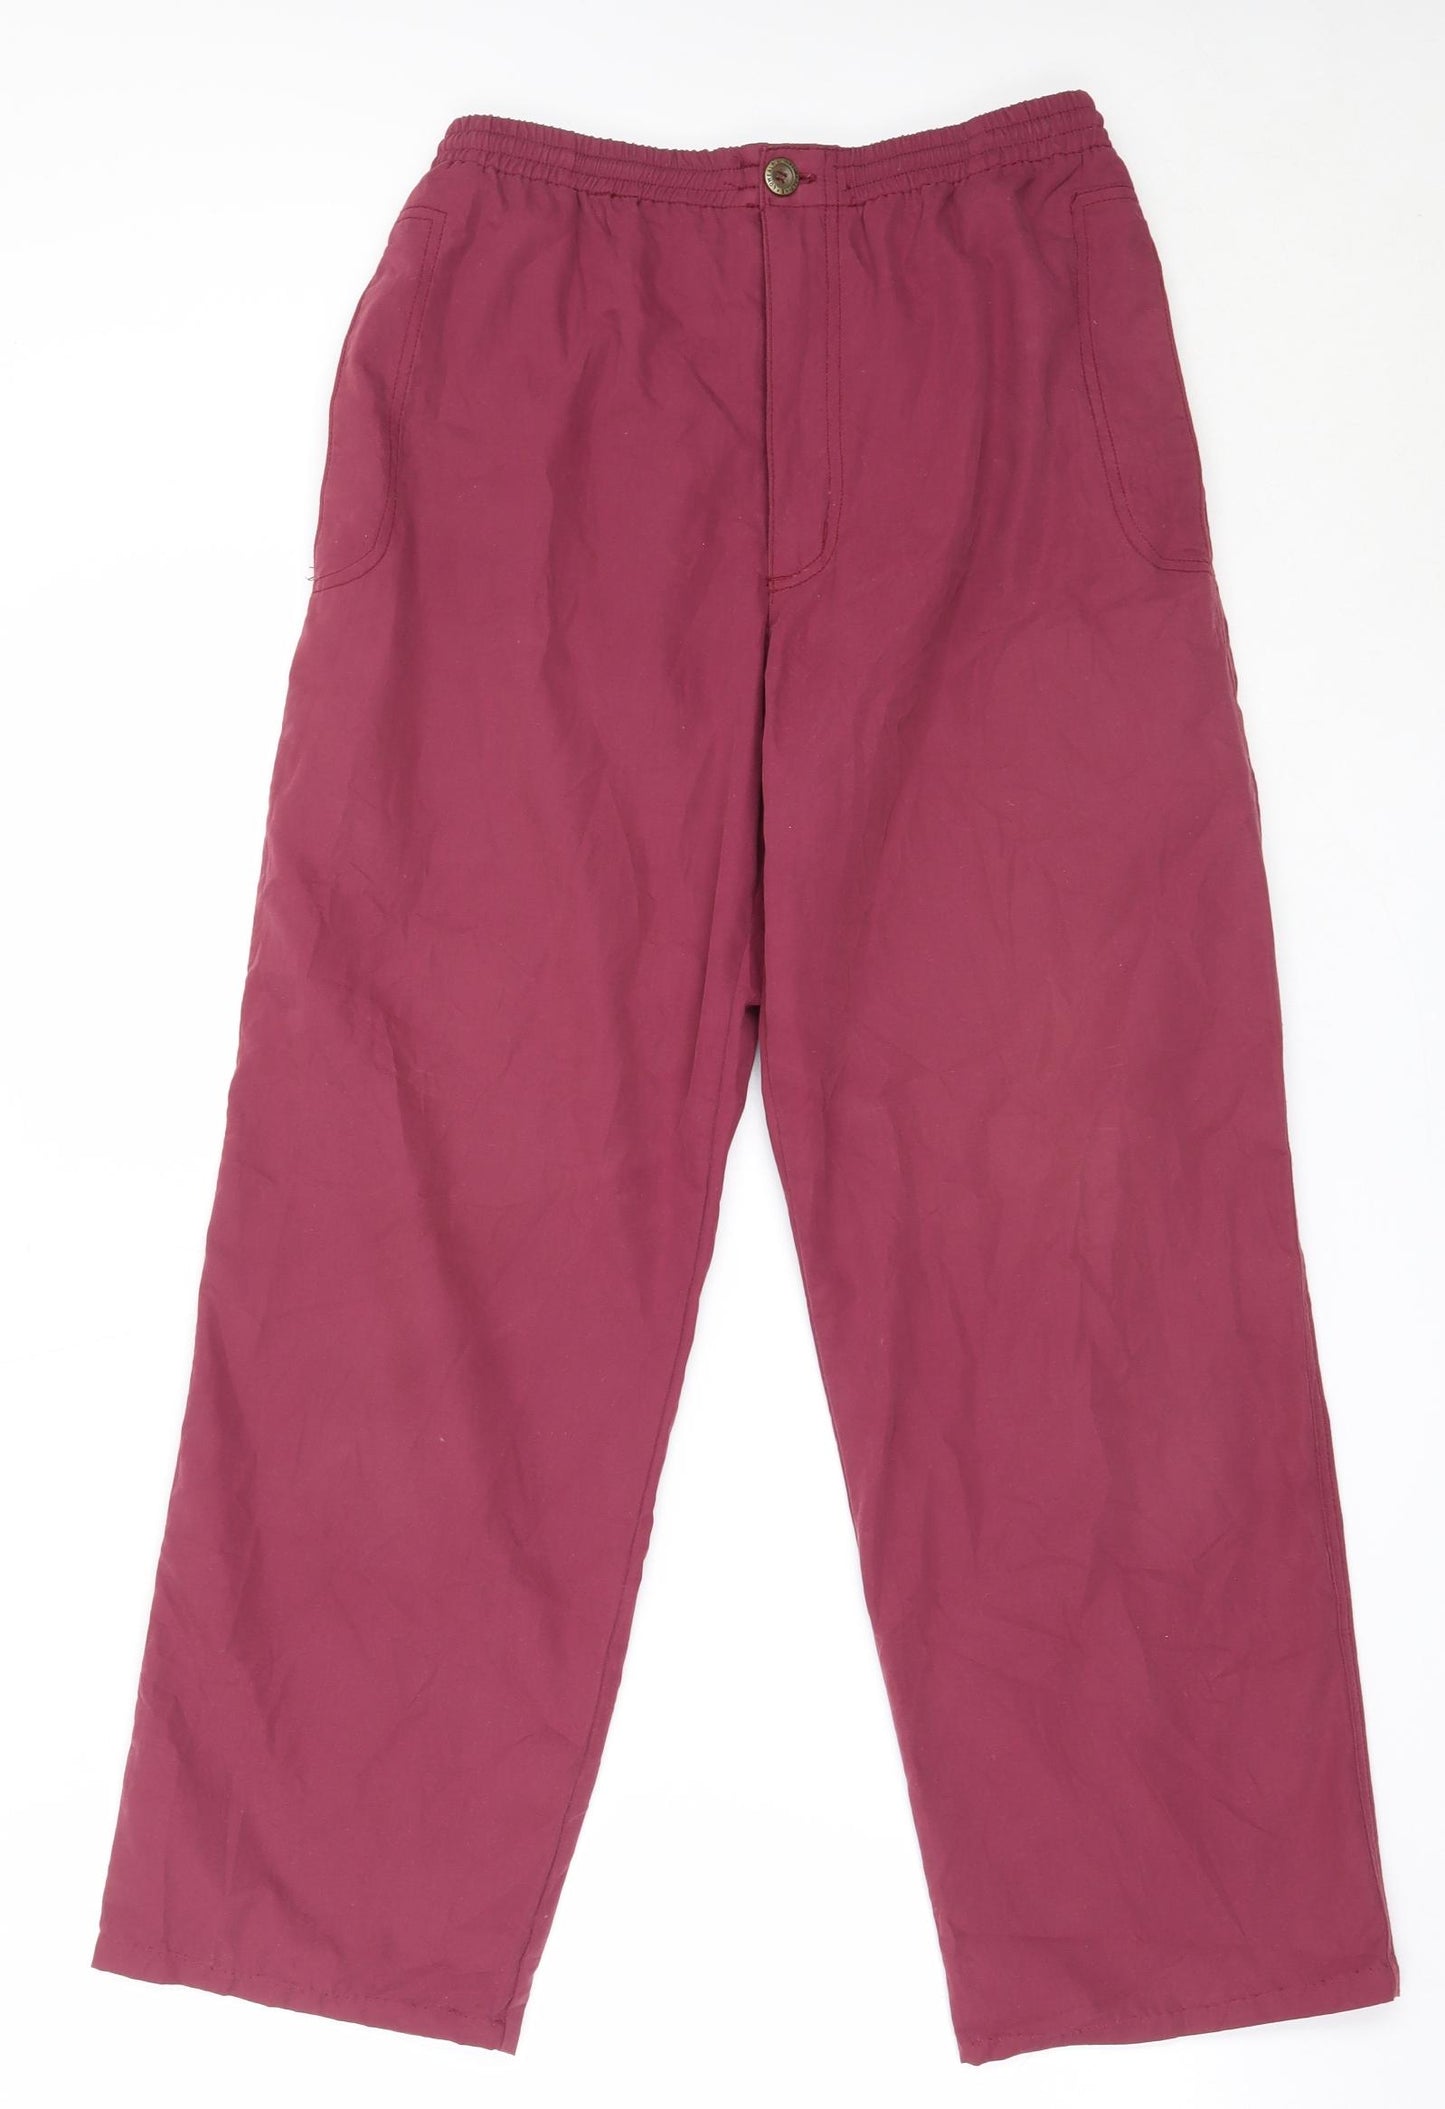 Lowe Alpine Womens Purple  Polyester Trousers  Size S L27 in Regular